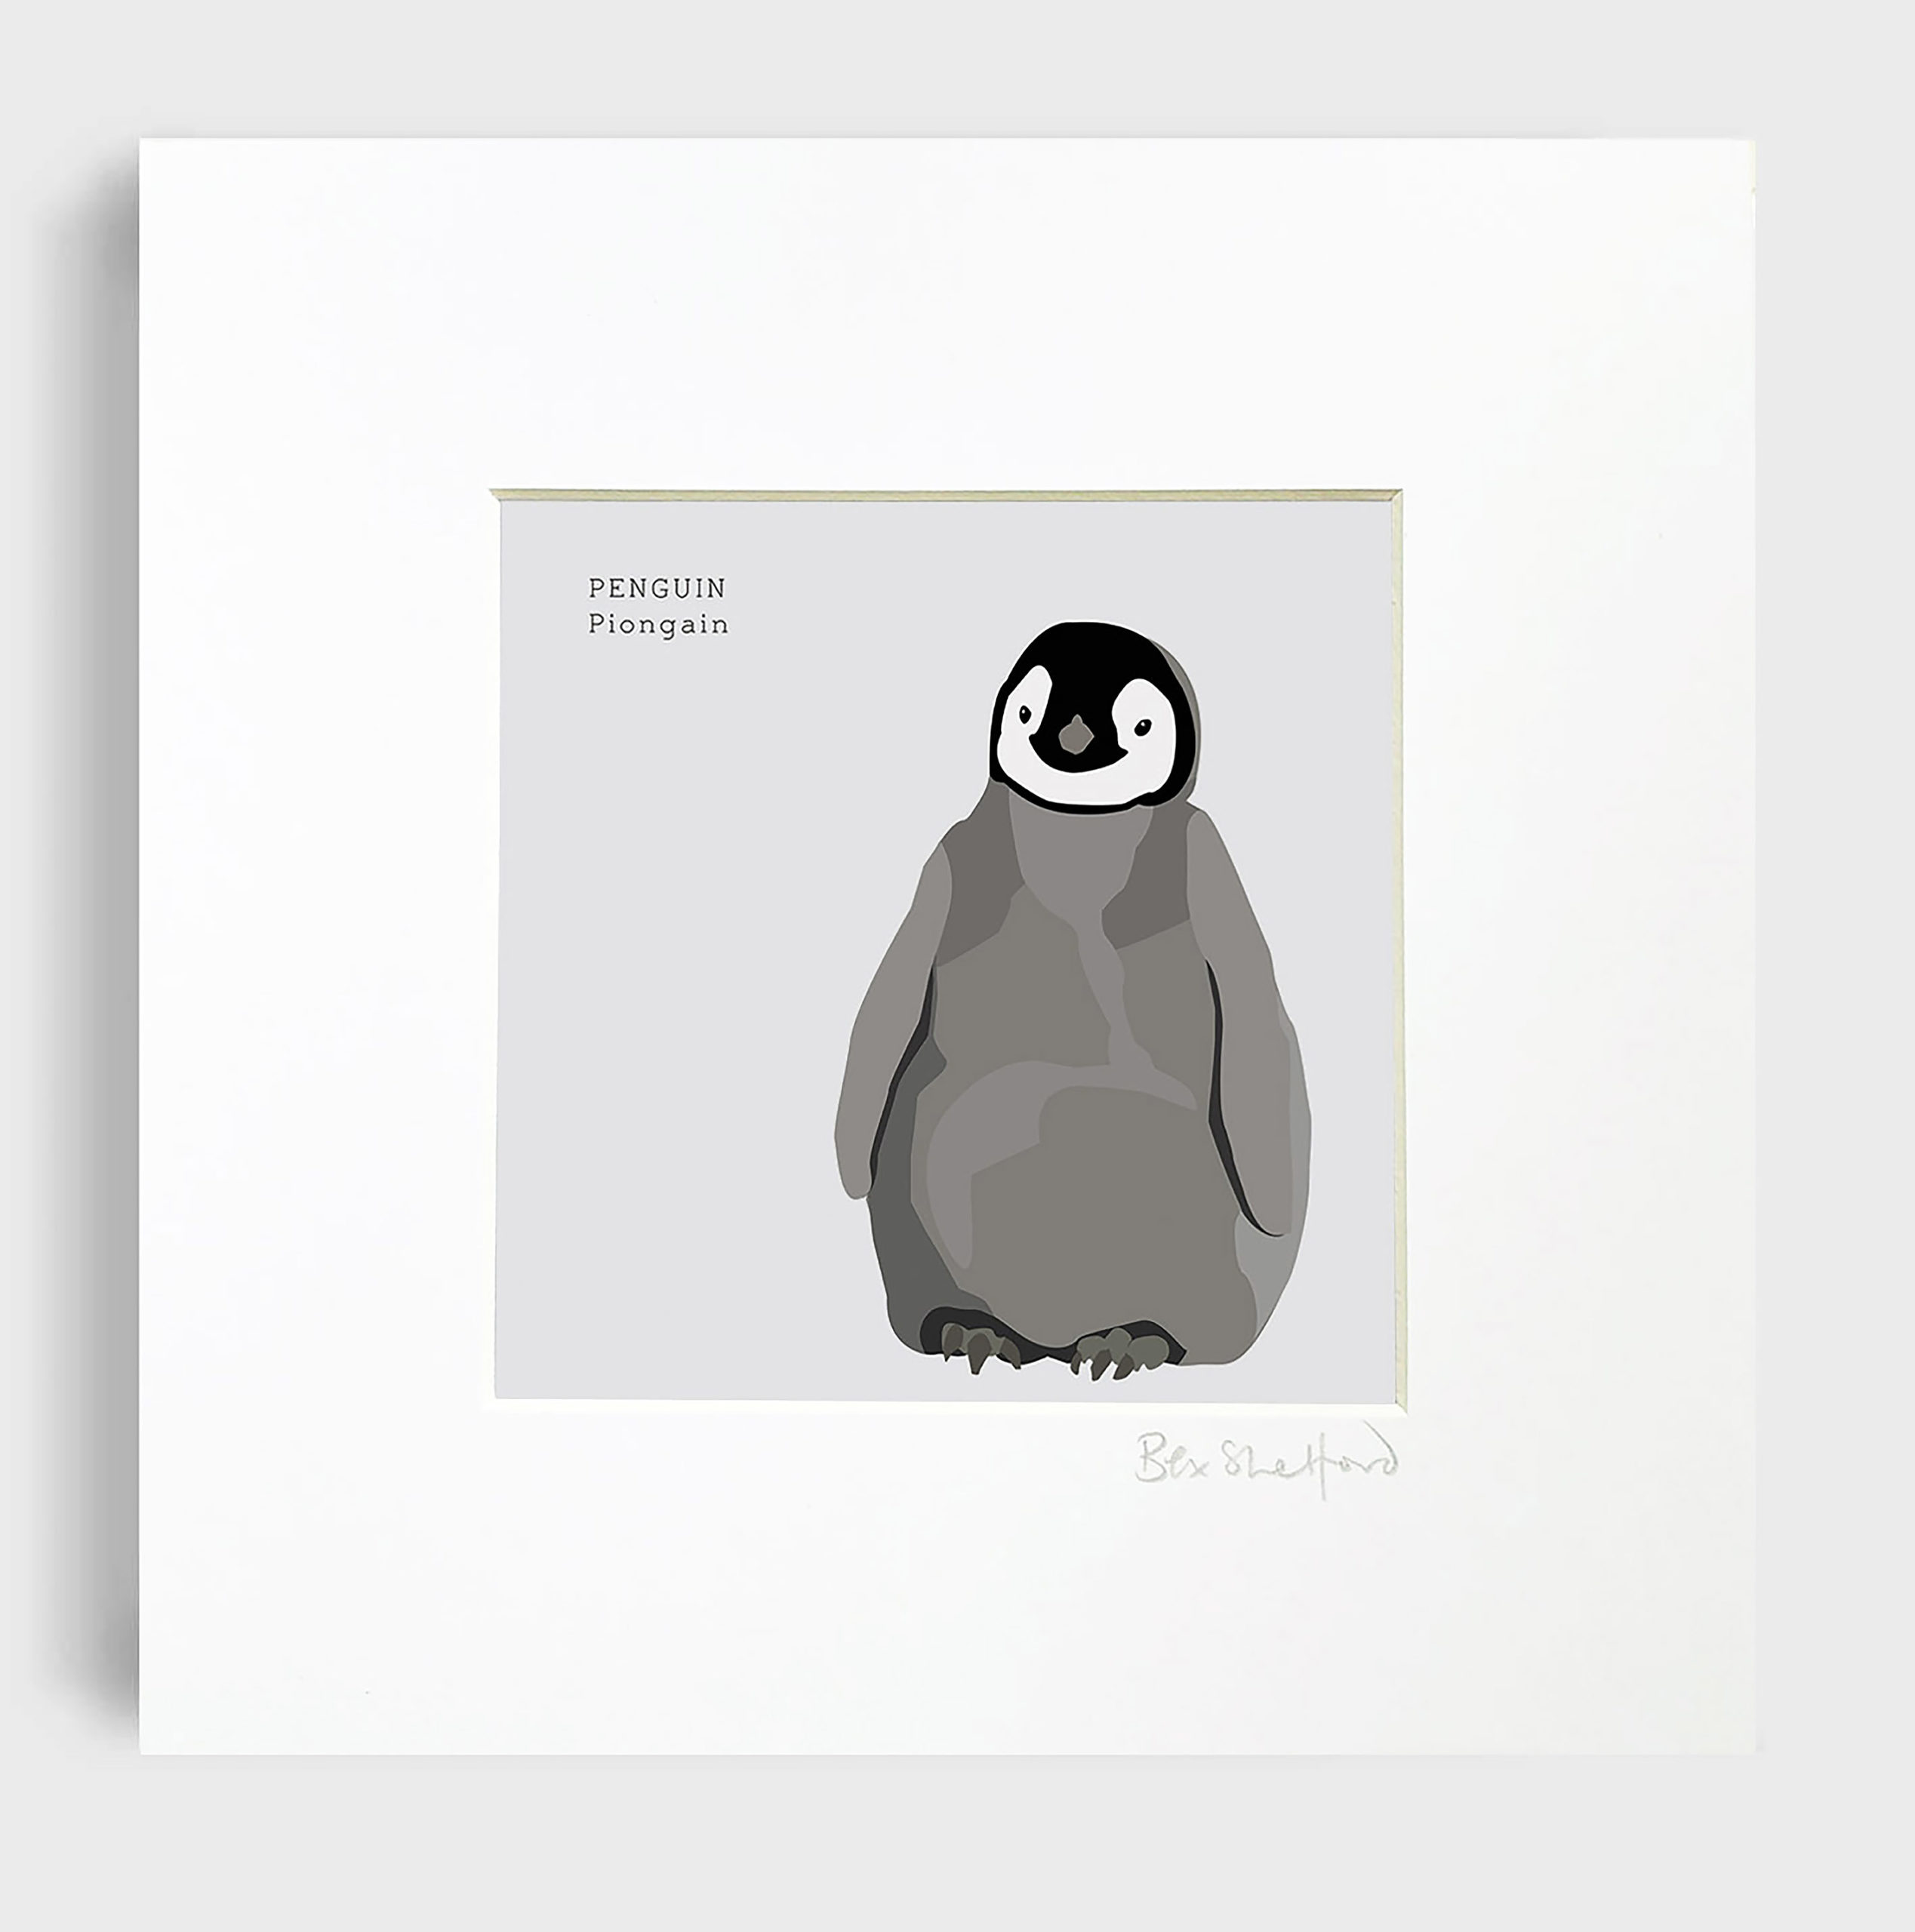 Penguin - Piongain Art Print